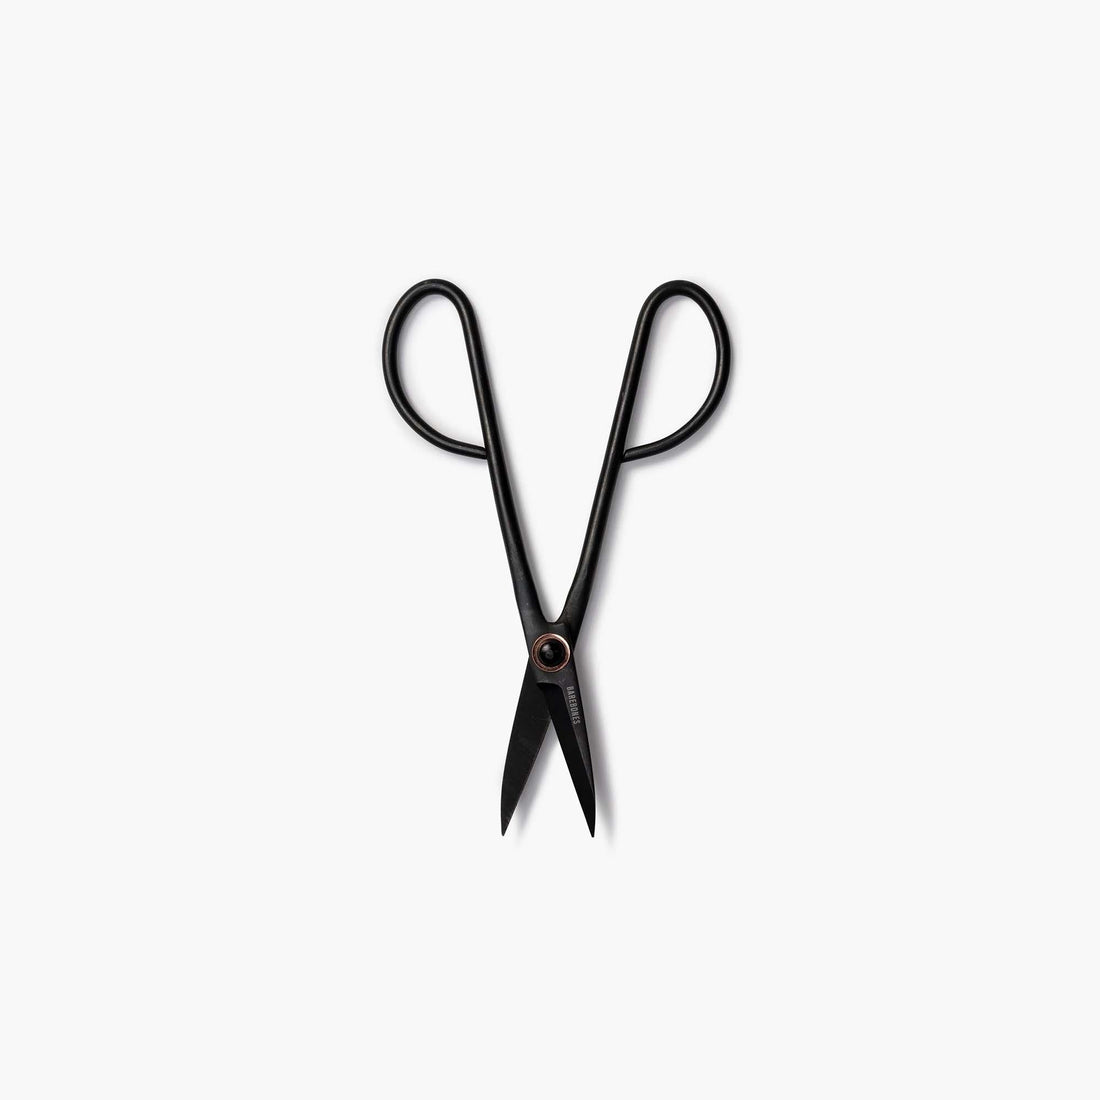 5-Blade Easy Grip Herb Cutting Scissors - Inspire Uplift